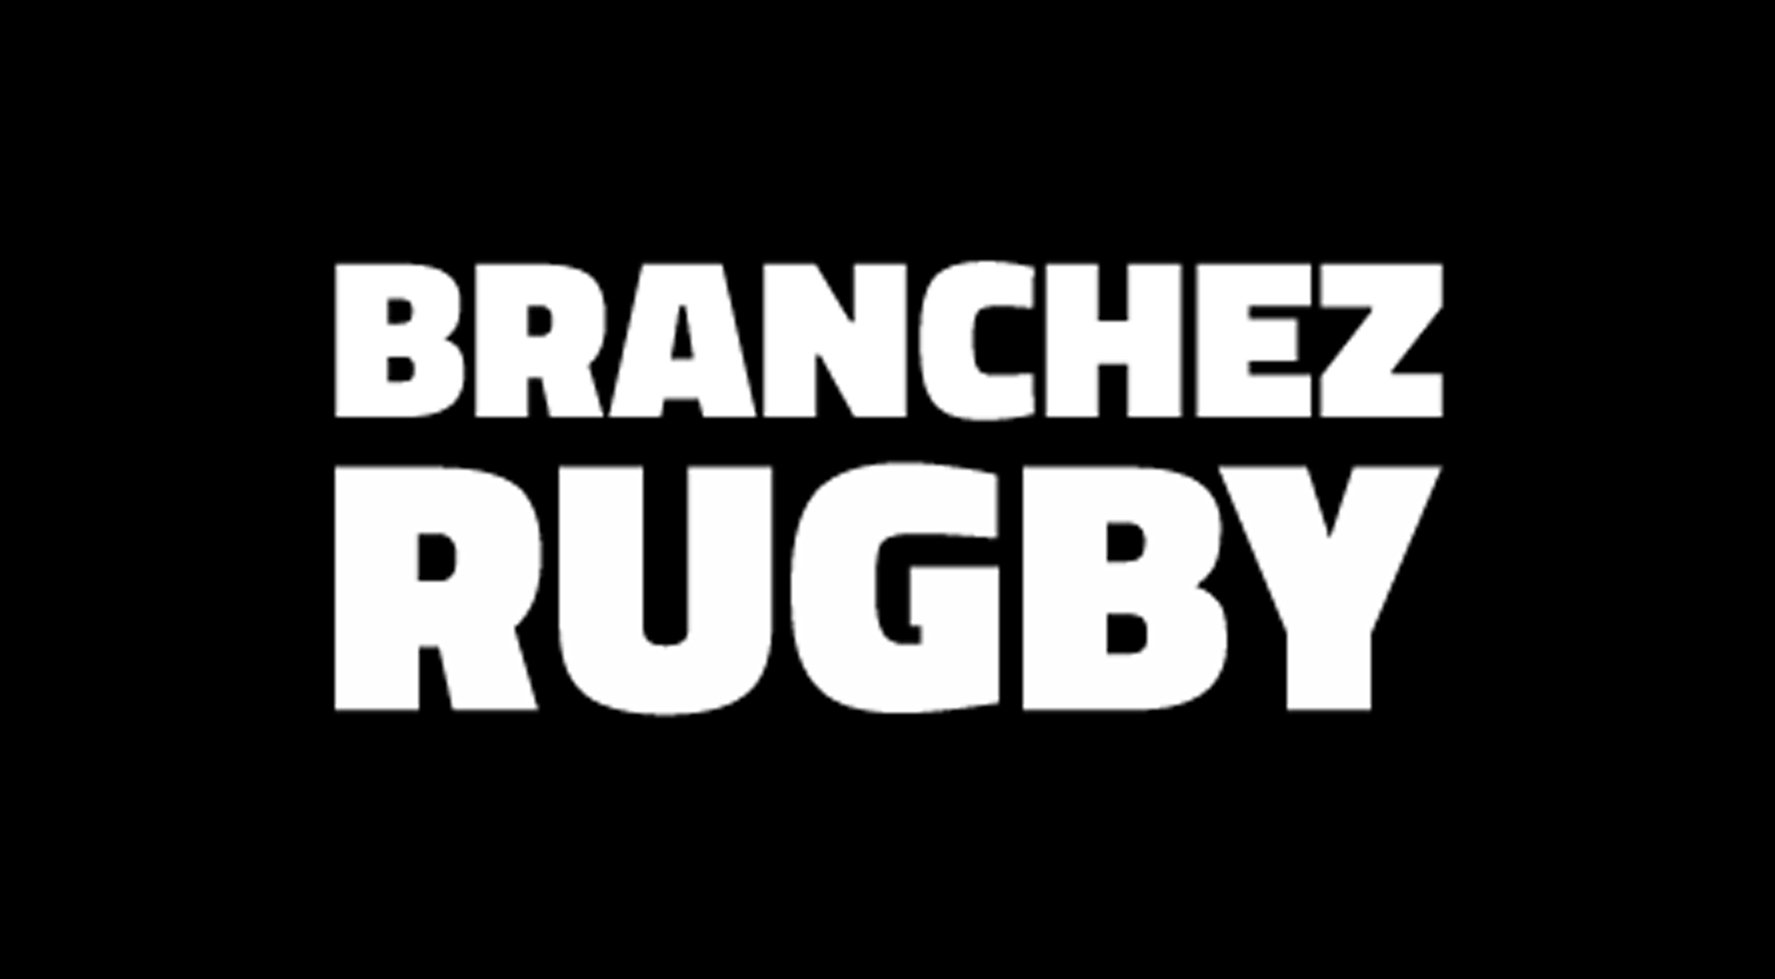 Branchez rugby / mm media